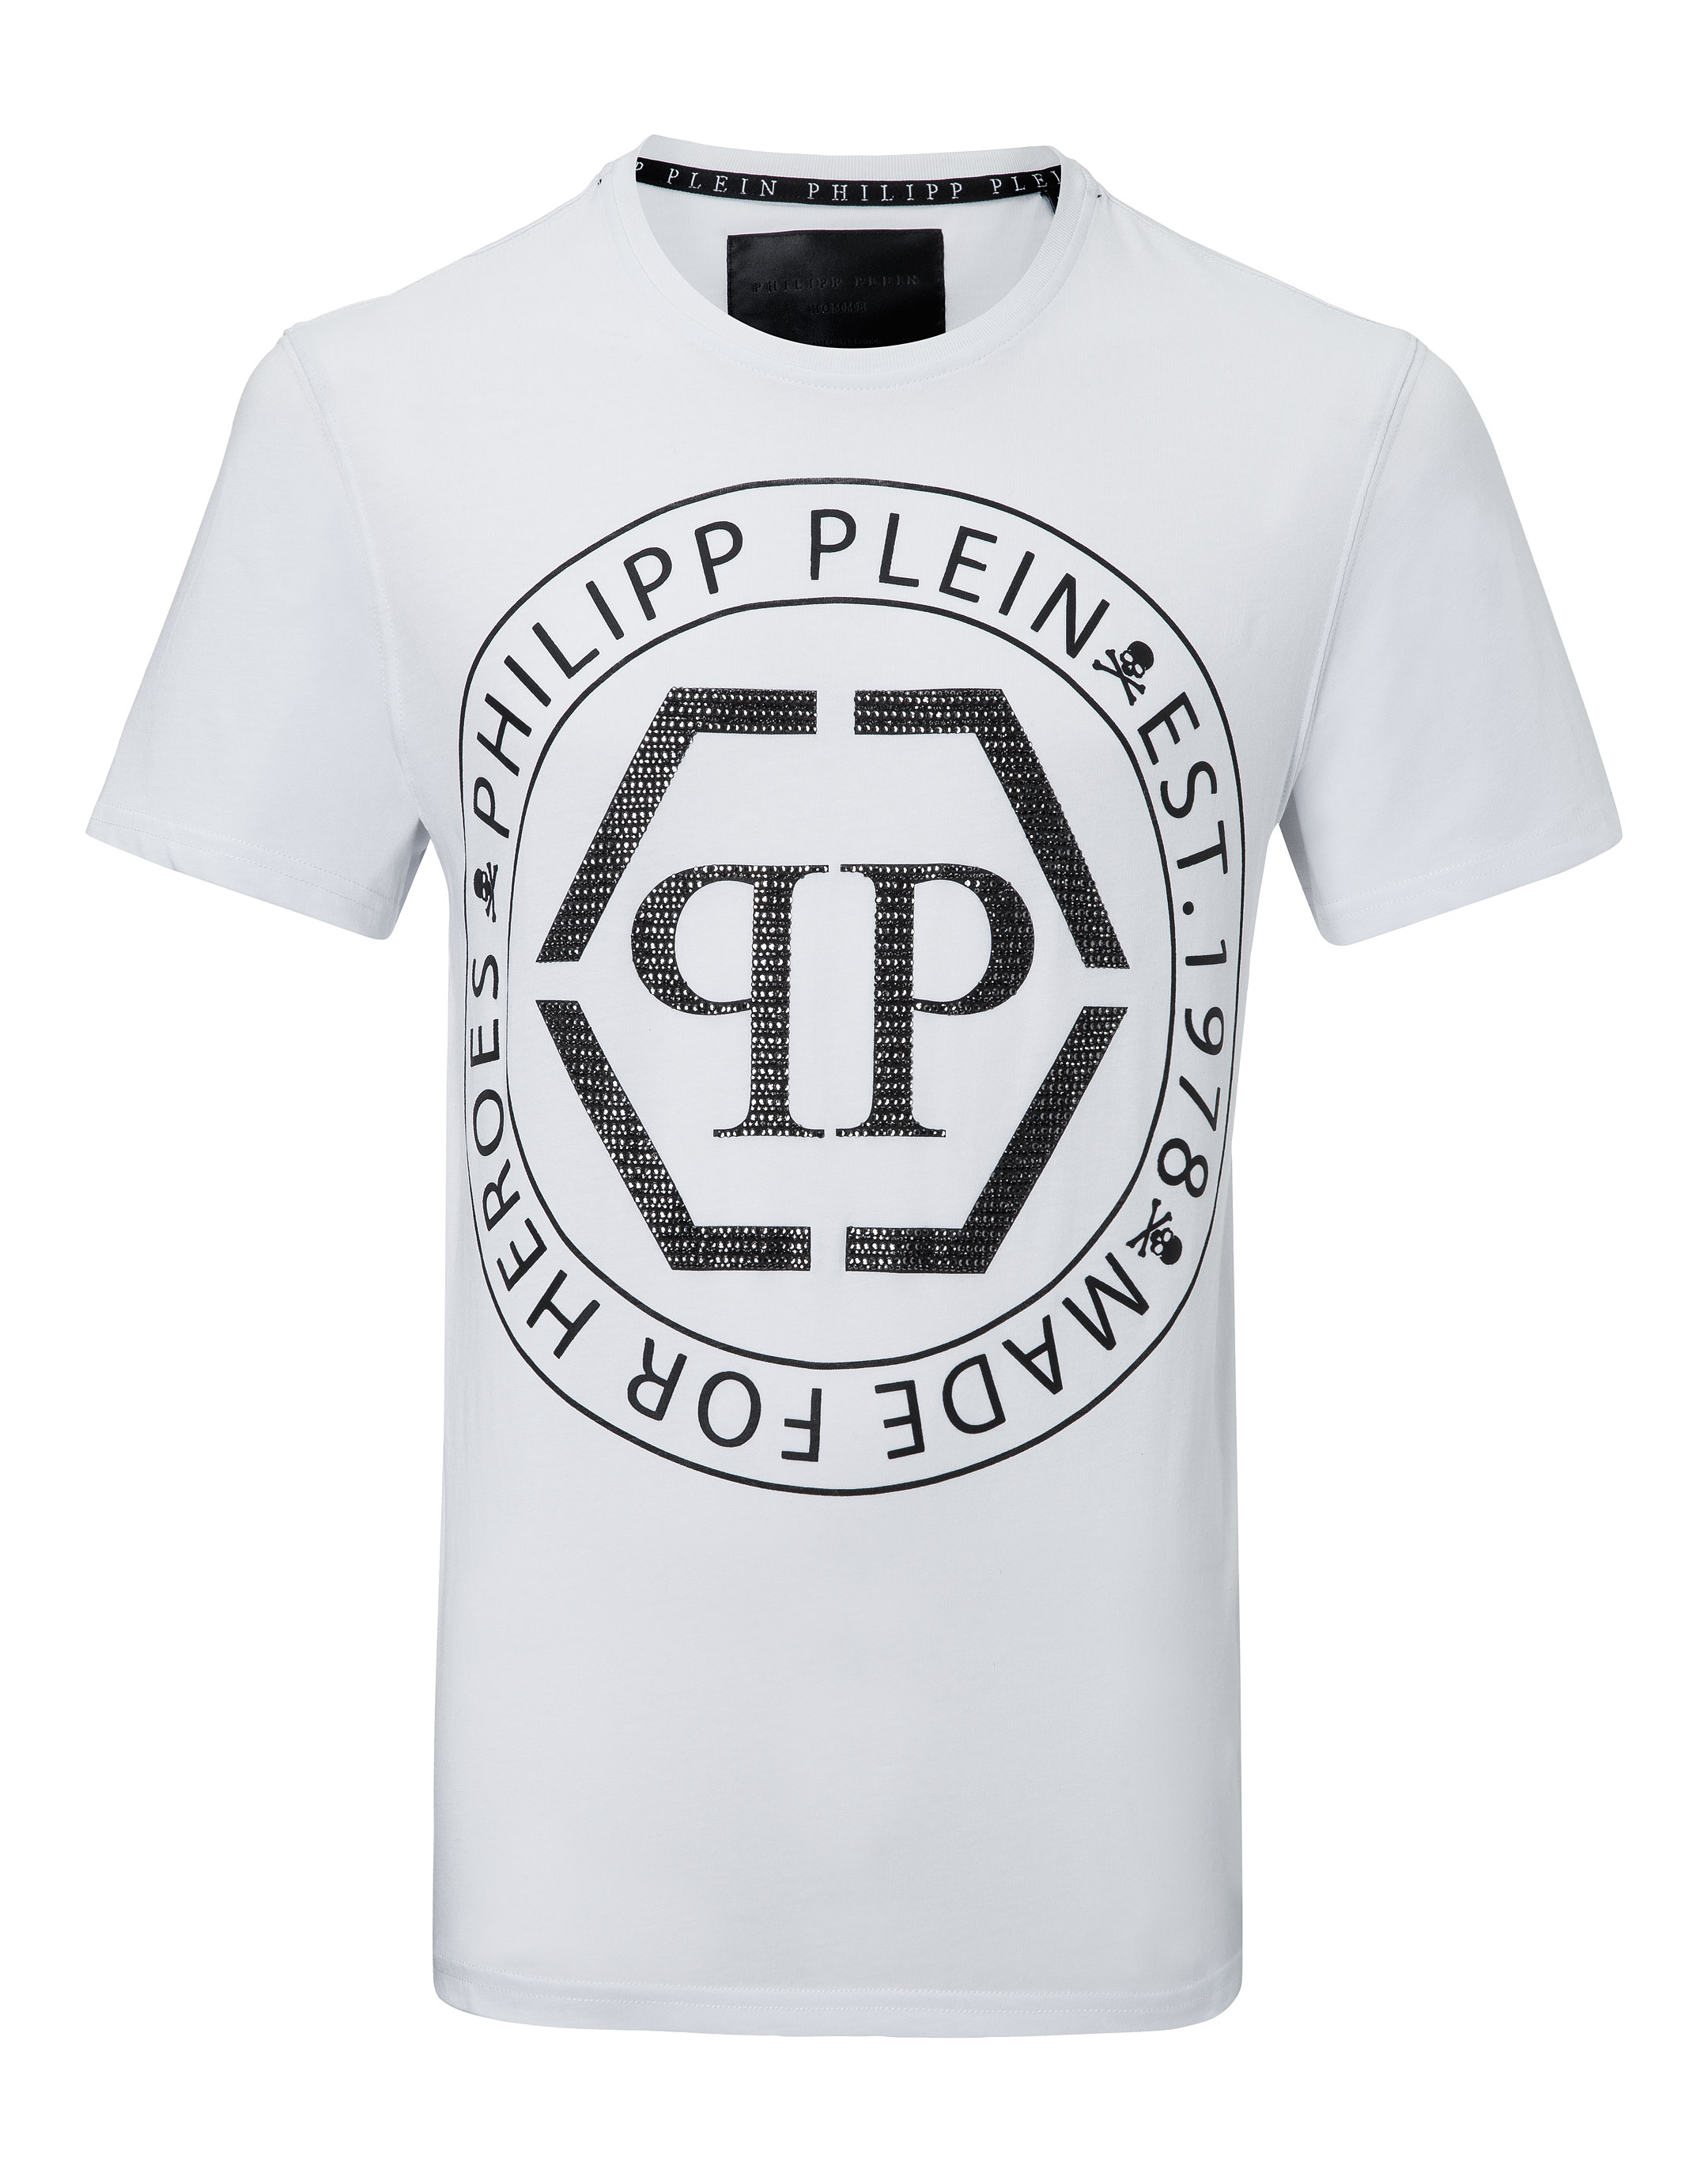 philipp plein t shirt logo